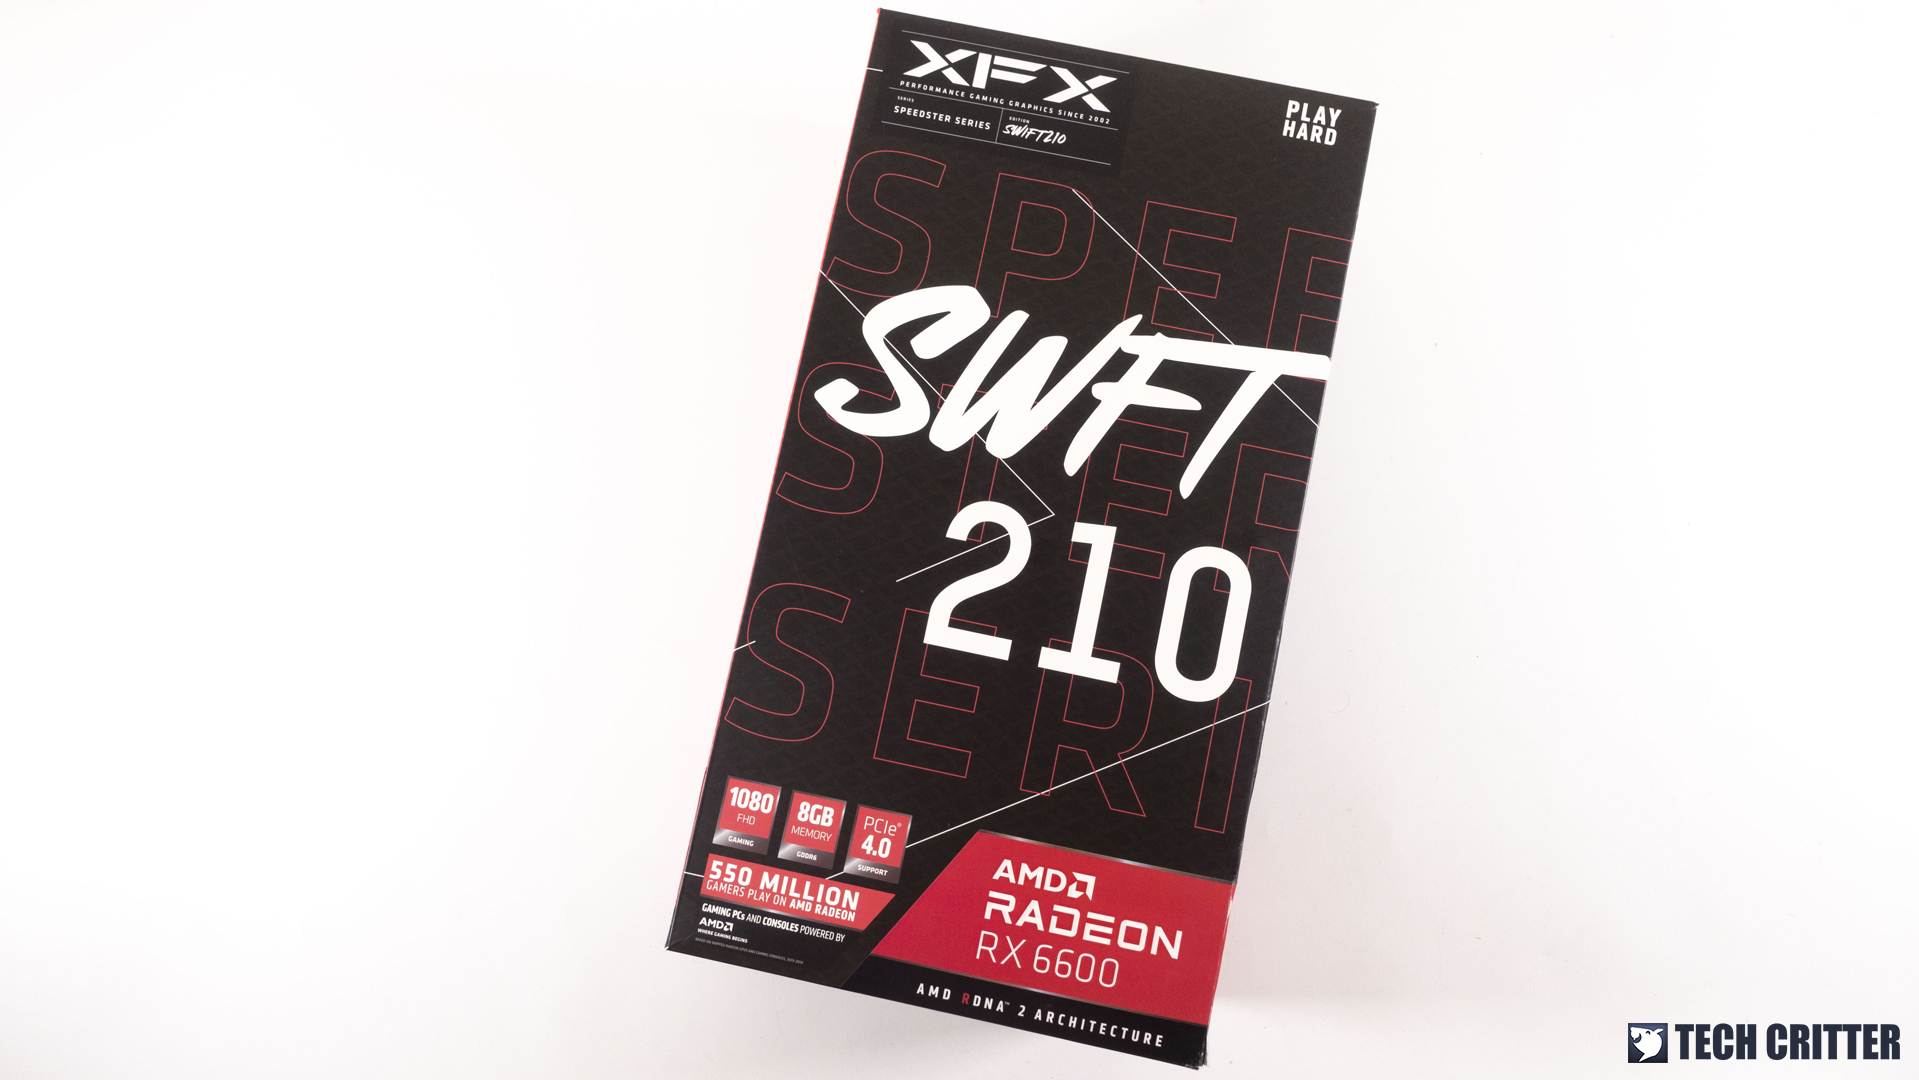 XFX Radeon RX 6600 Speedster Slick 210 Review